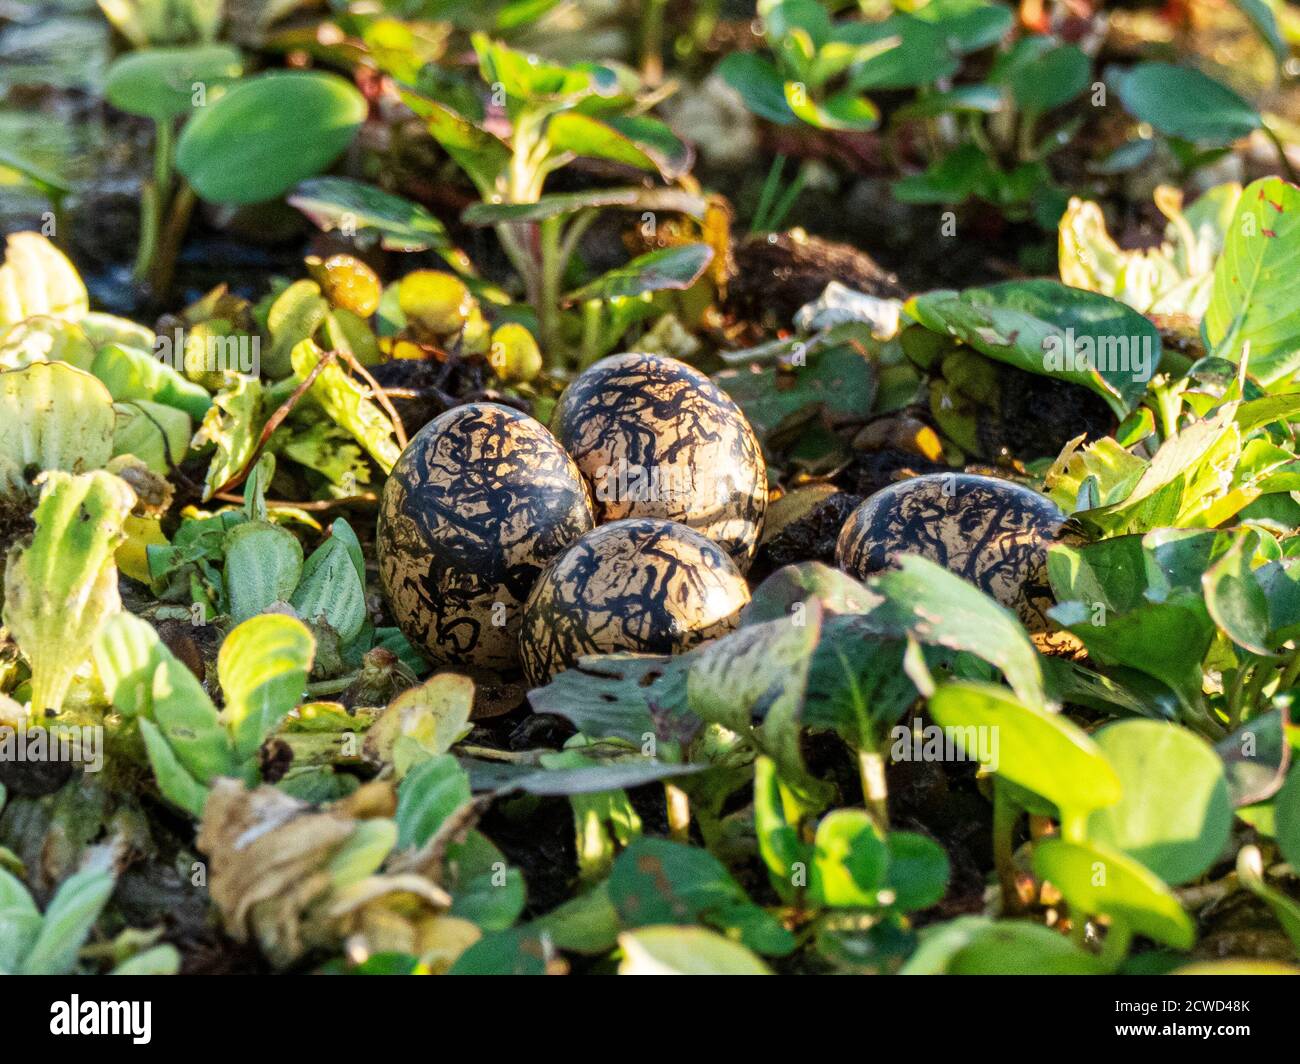 Wattled jacana, Jacana jacana, eggs hidden on Victoria lily pad, Rio El Dorado, Pacaya-Samiria Reserve, Peru. Stock Photo